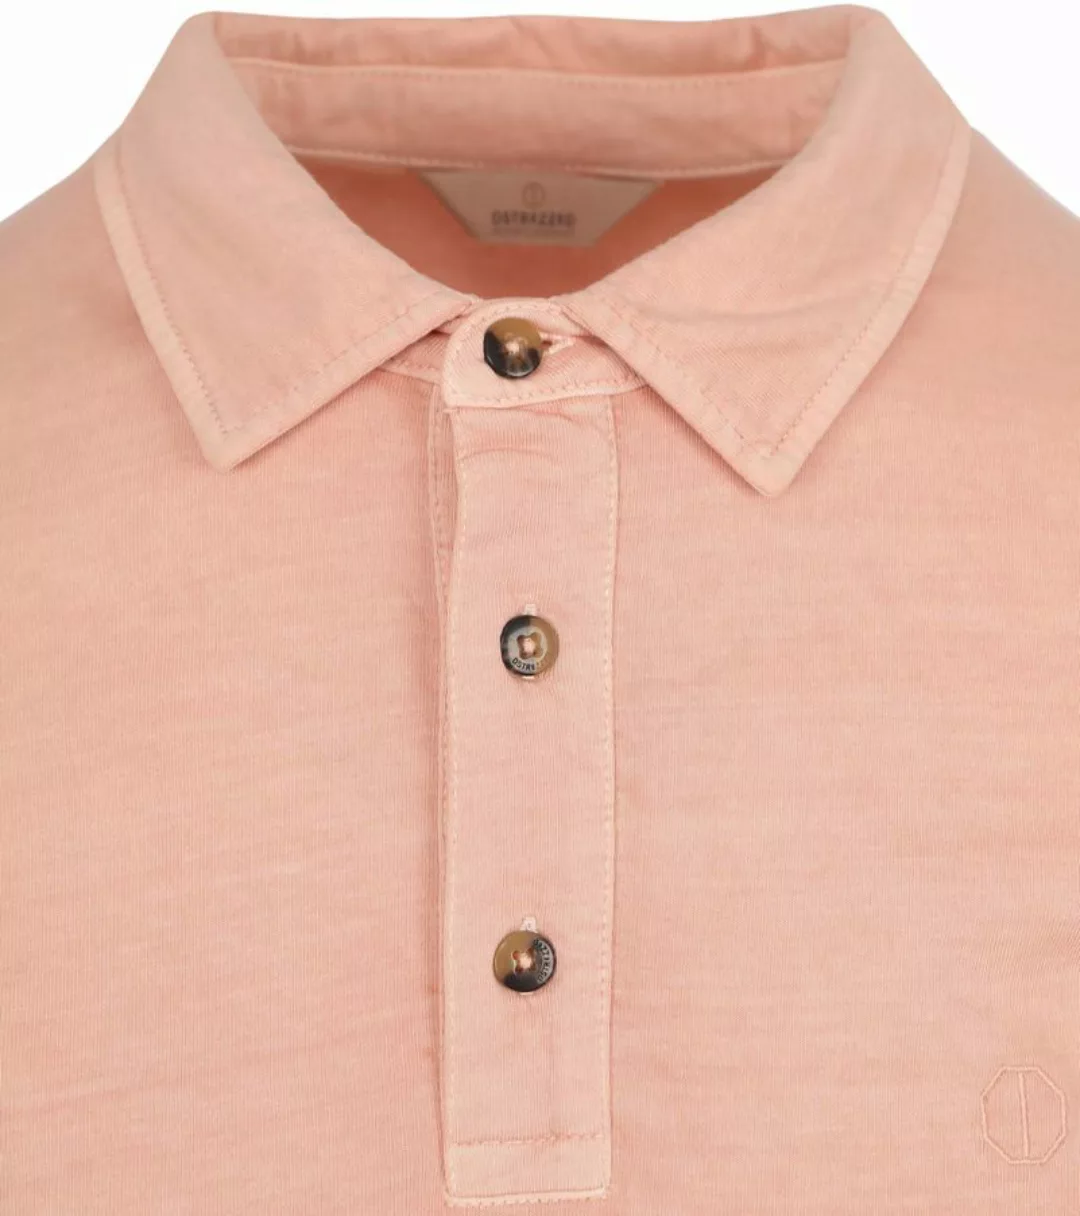 Dstrezzed Poloshirt Rowan Rosa - Größe S günstig online kaufen